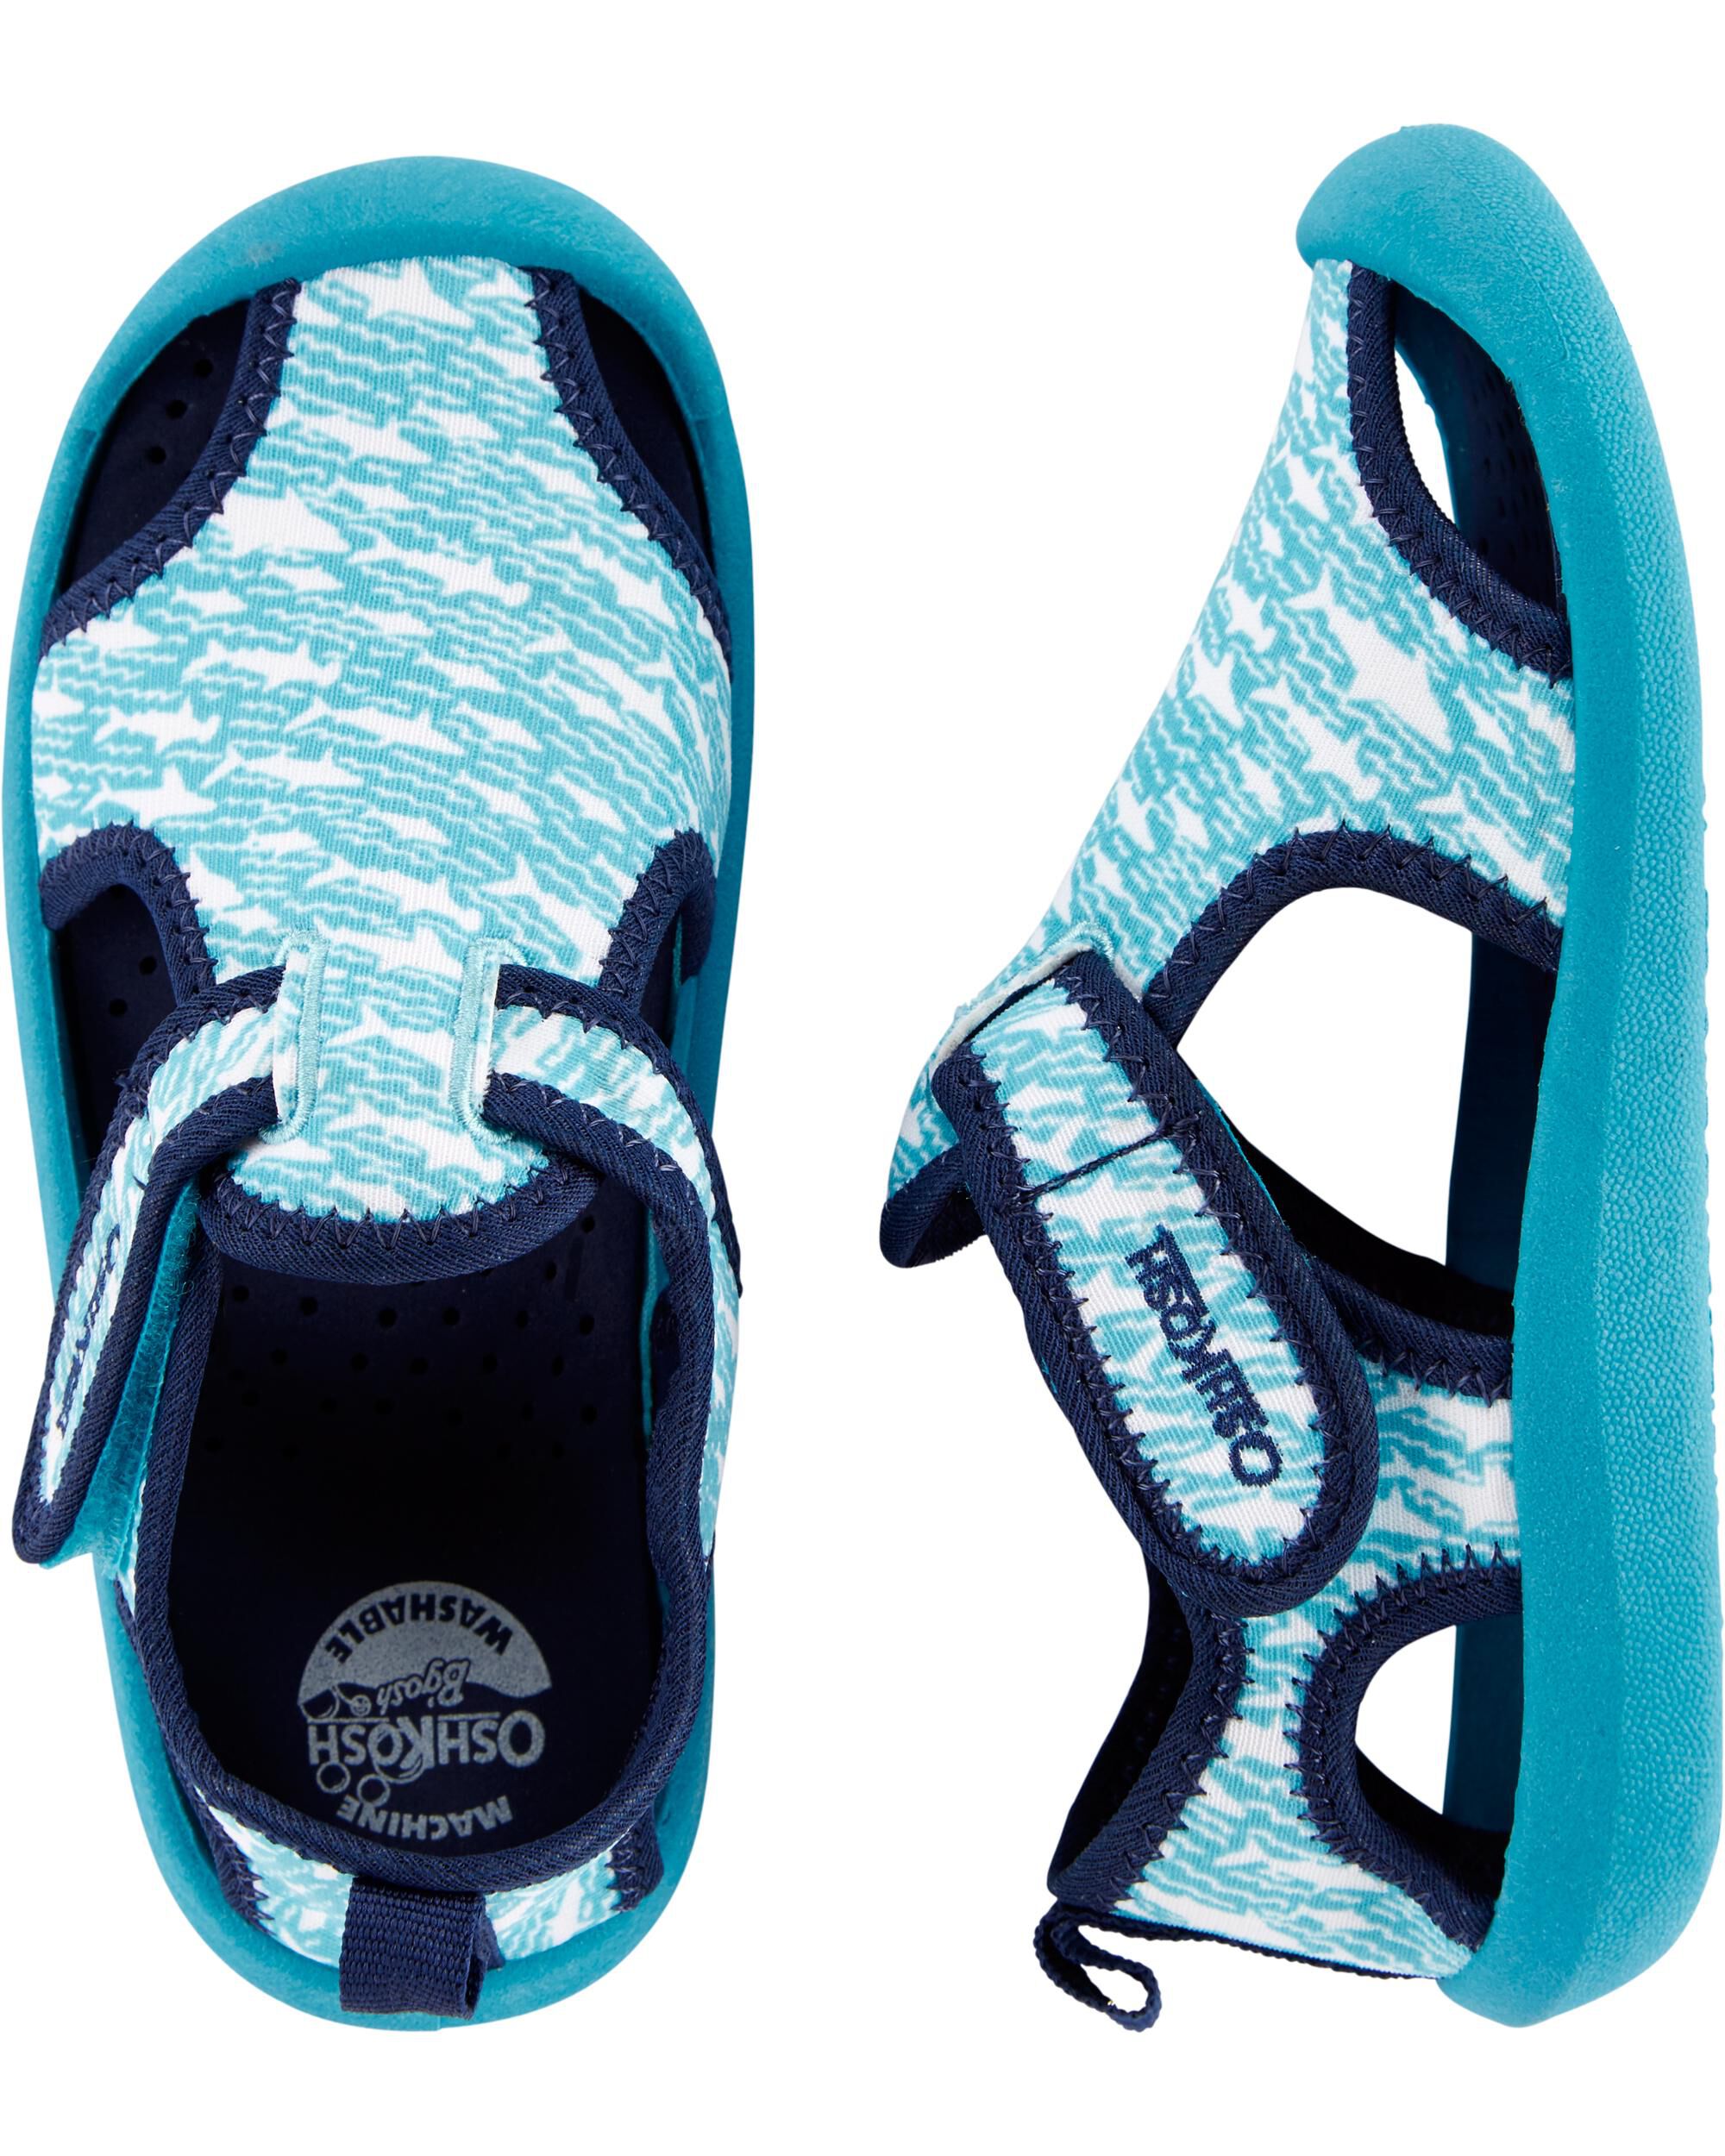 OshKosh Shark Water Shoes | oshkosh.com